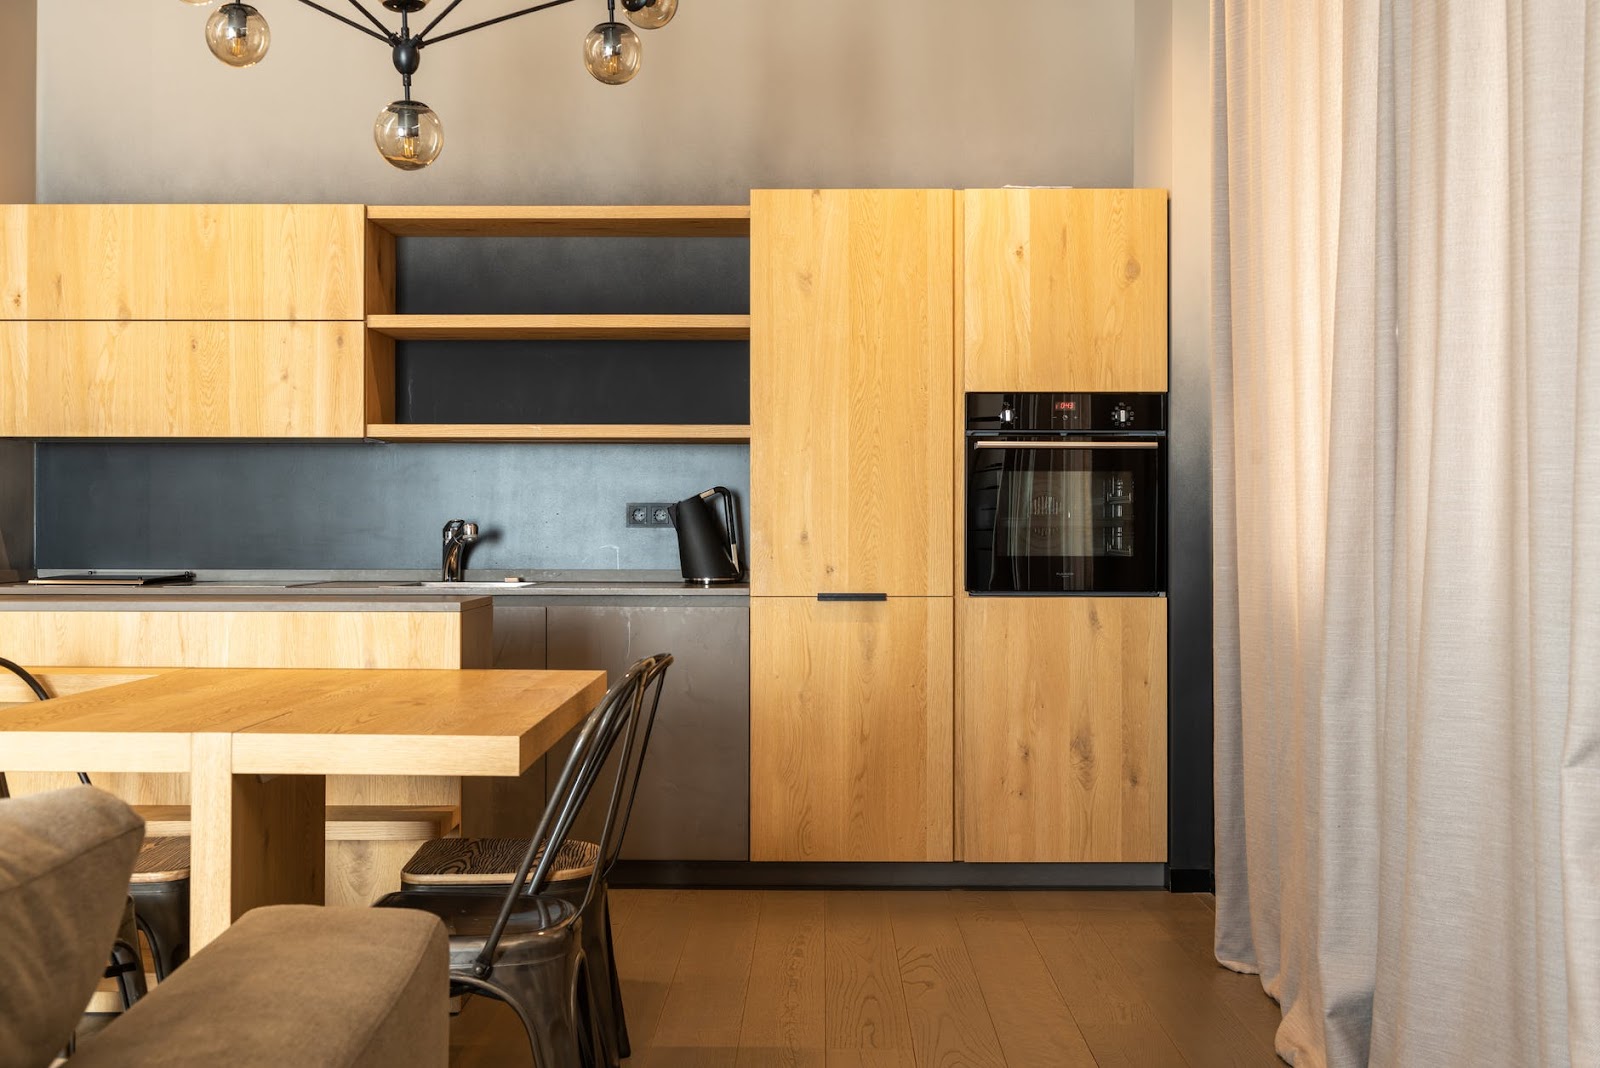 handle-free kitchen cabinets